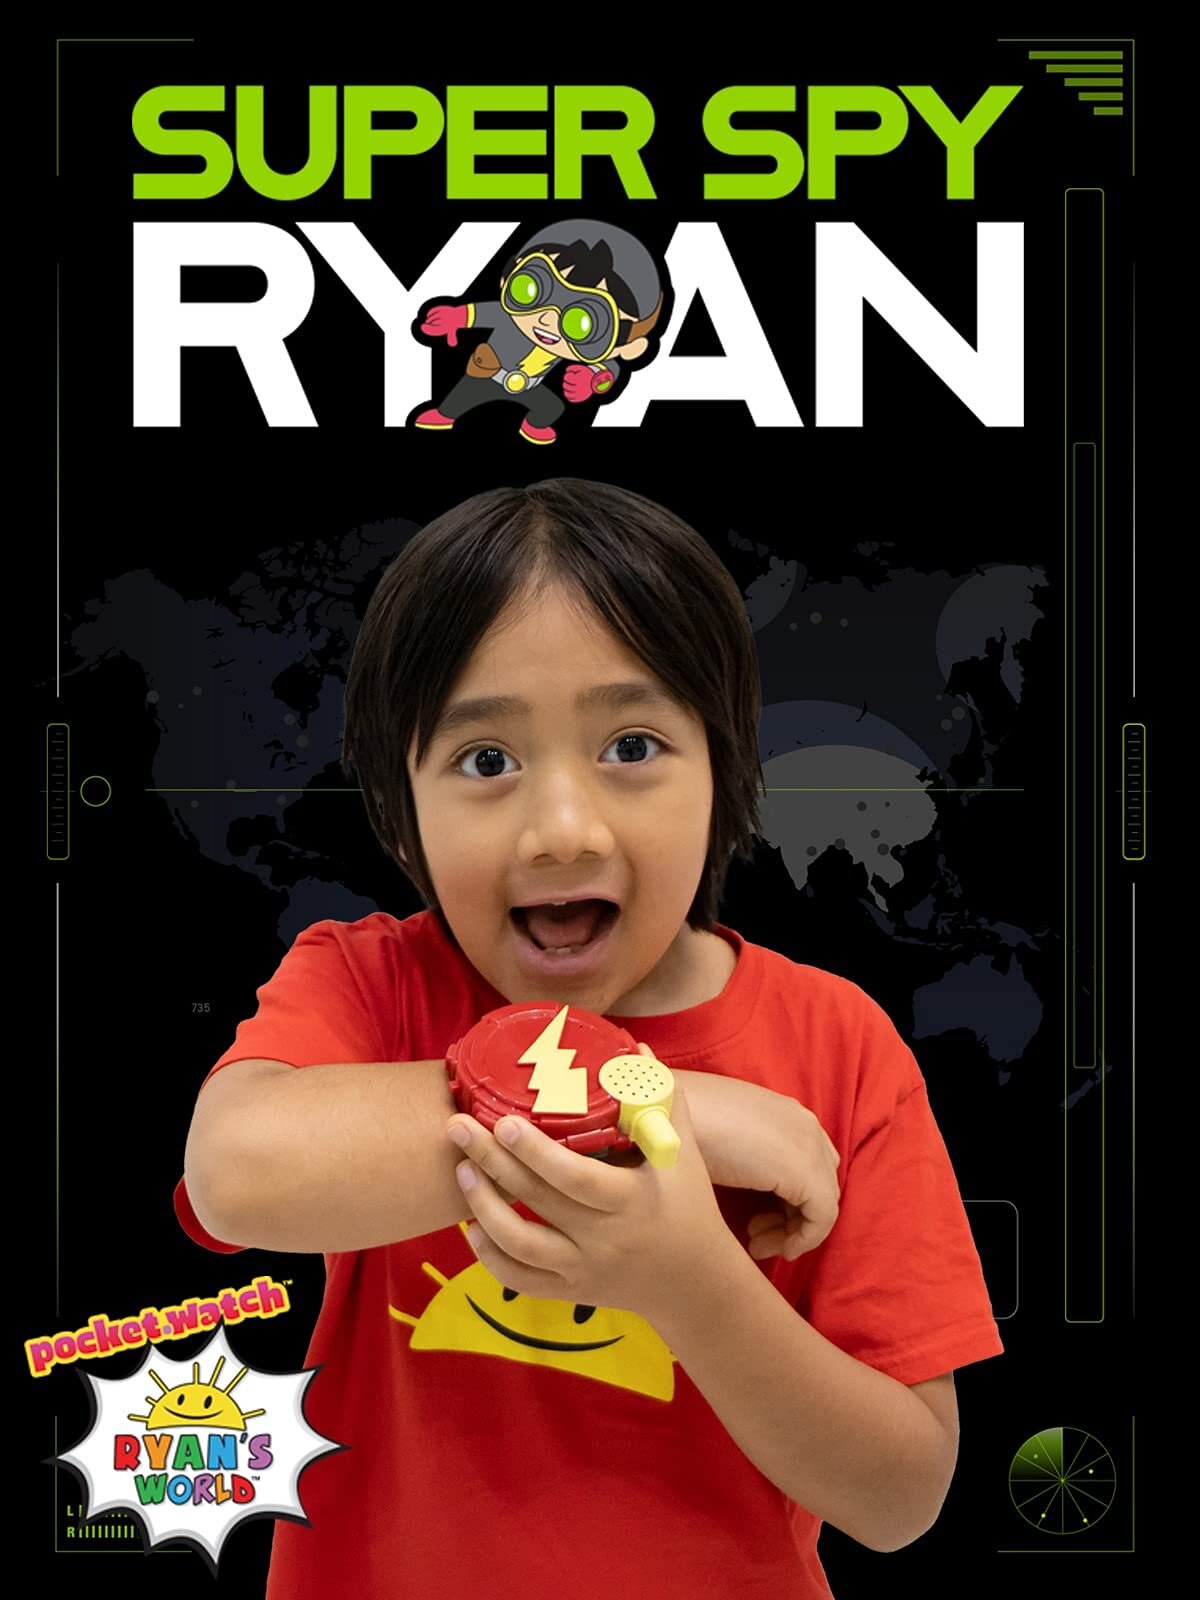 Super Spy Ryan Poster.jpg